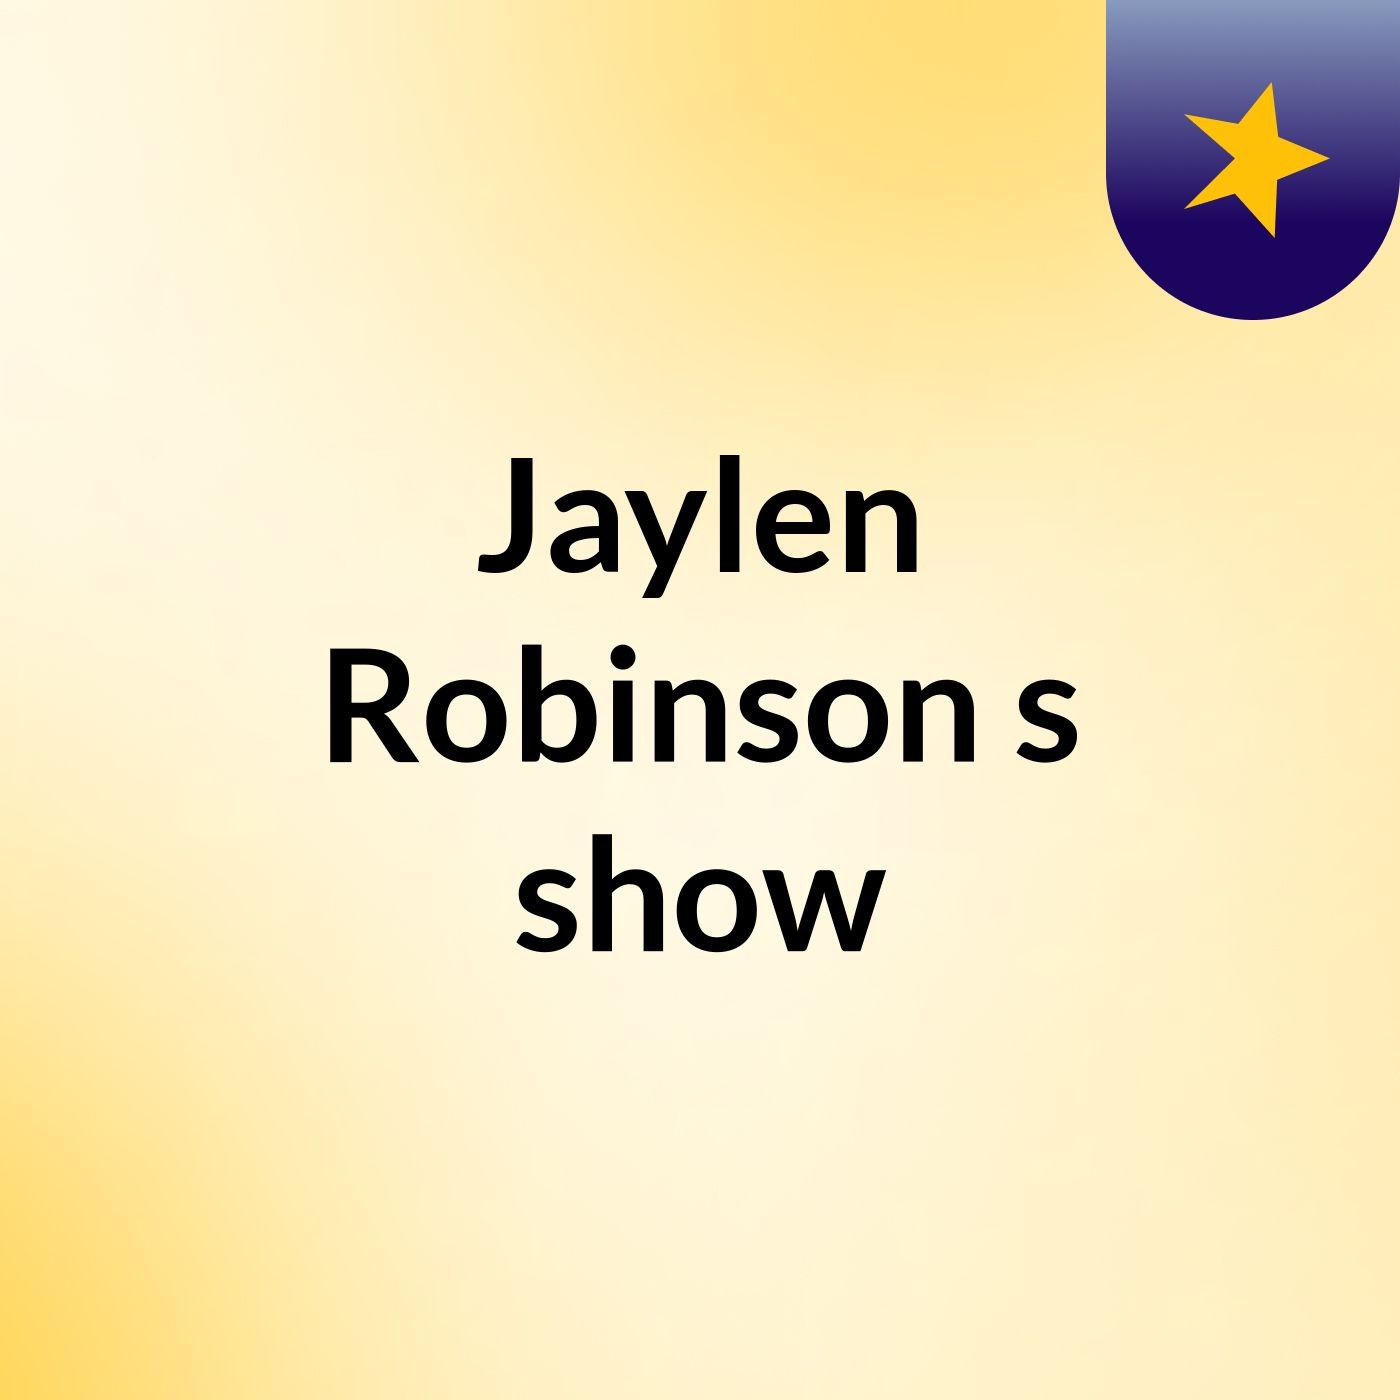 Episode 4 - Jaylen Robinson's show